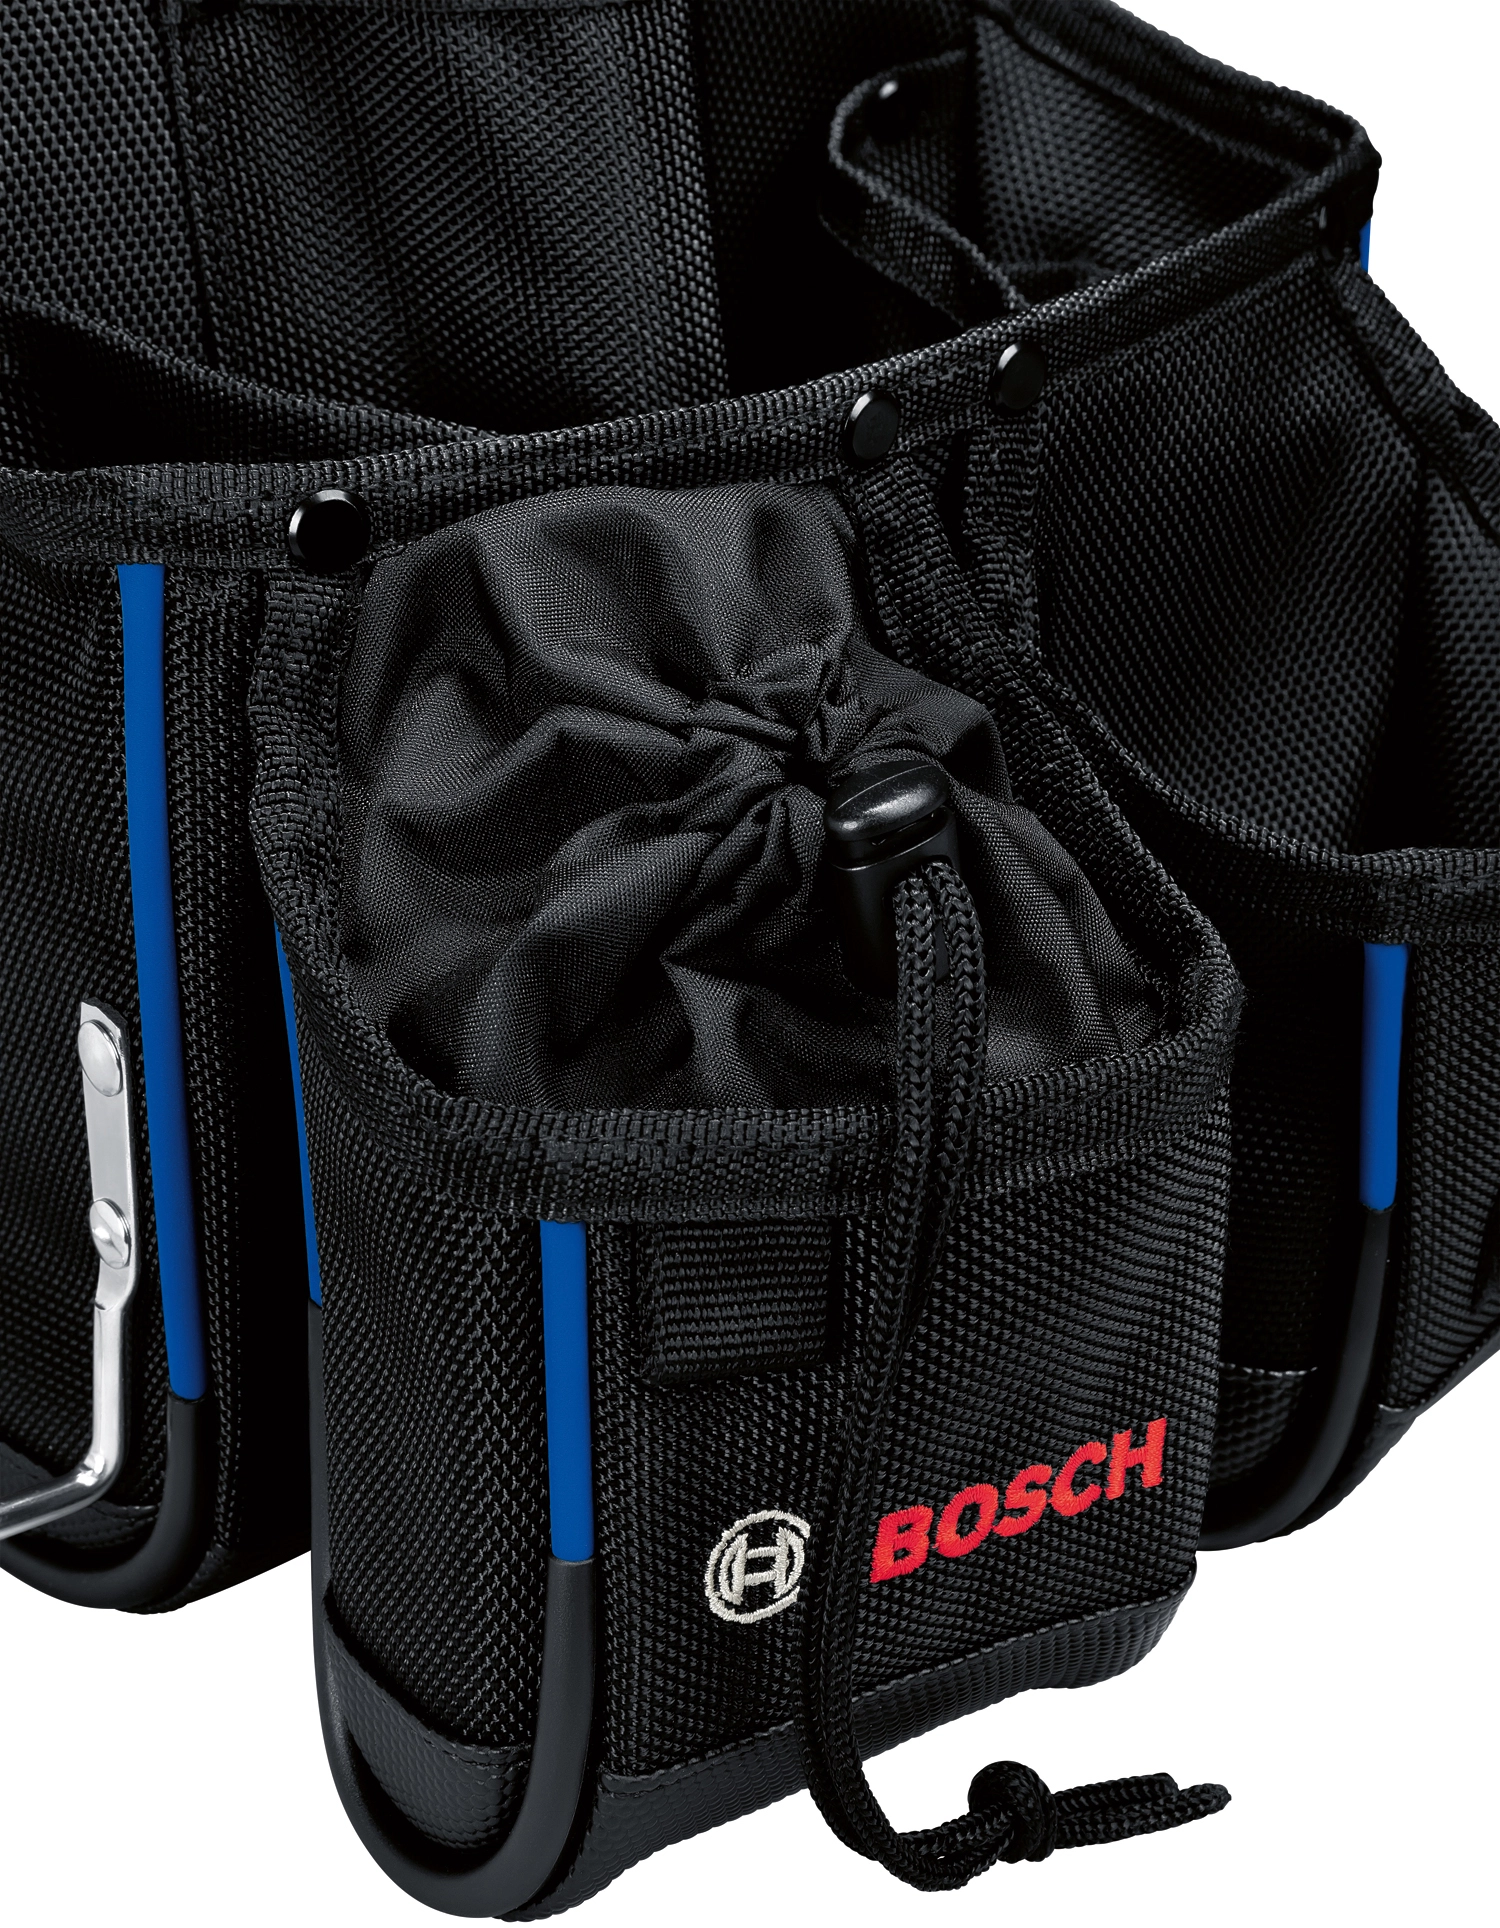 Bosch sac à outils Professional moyen